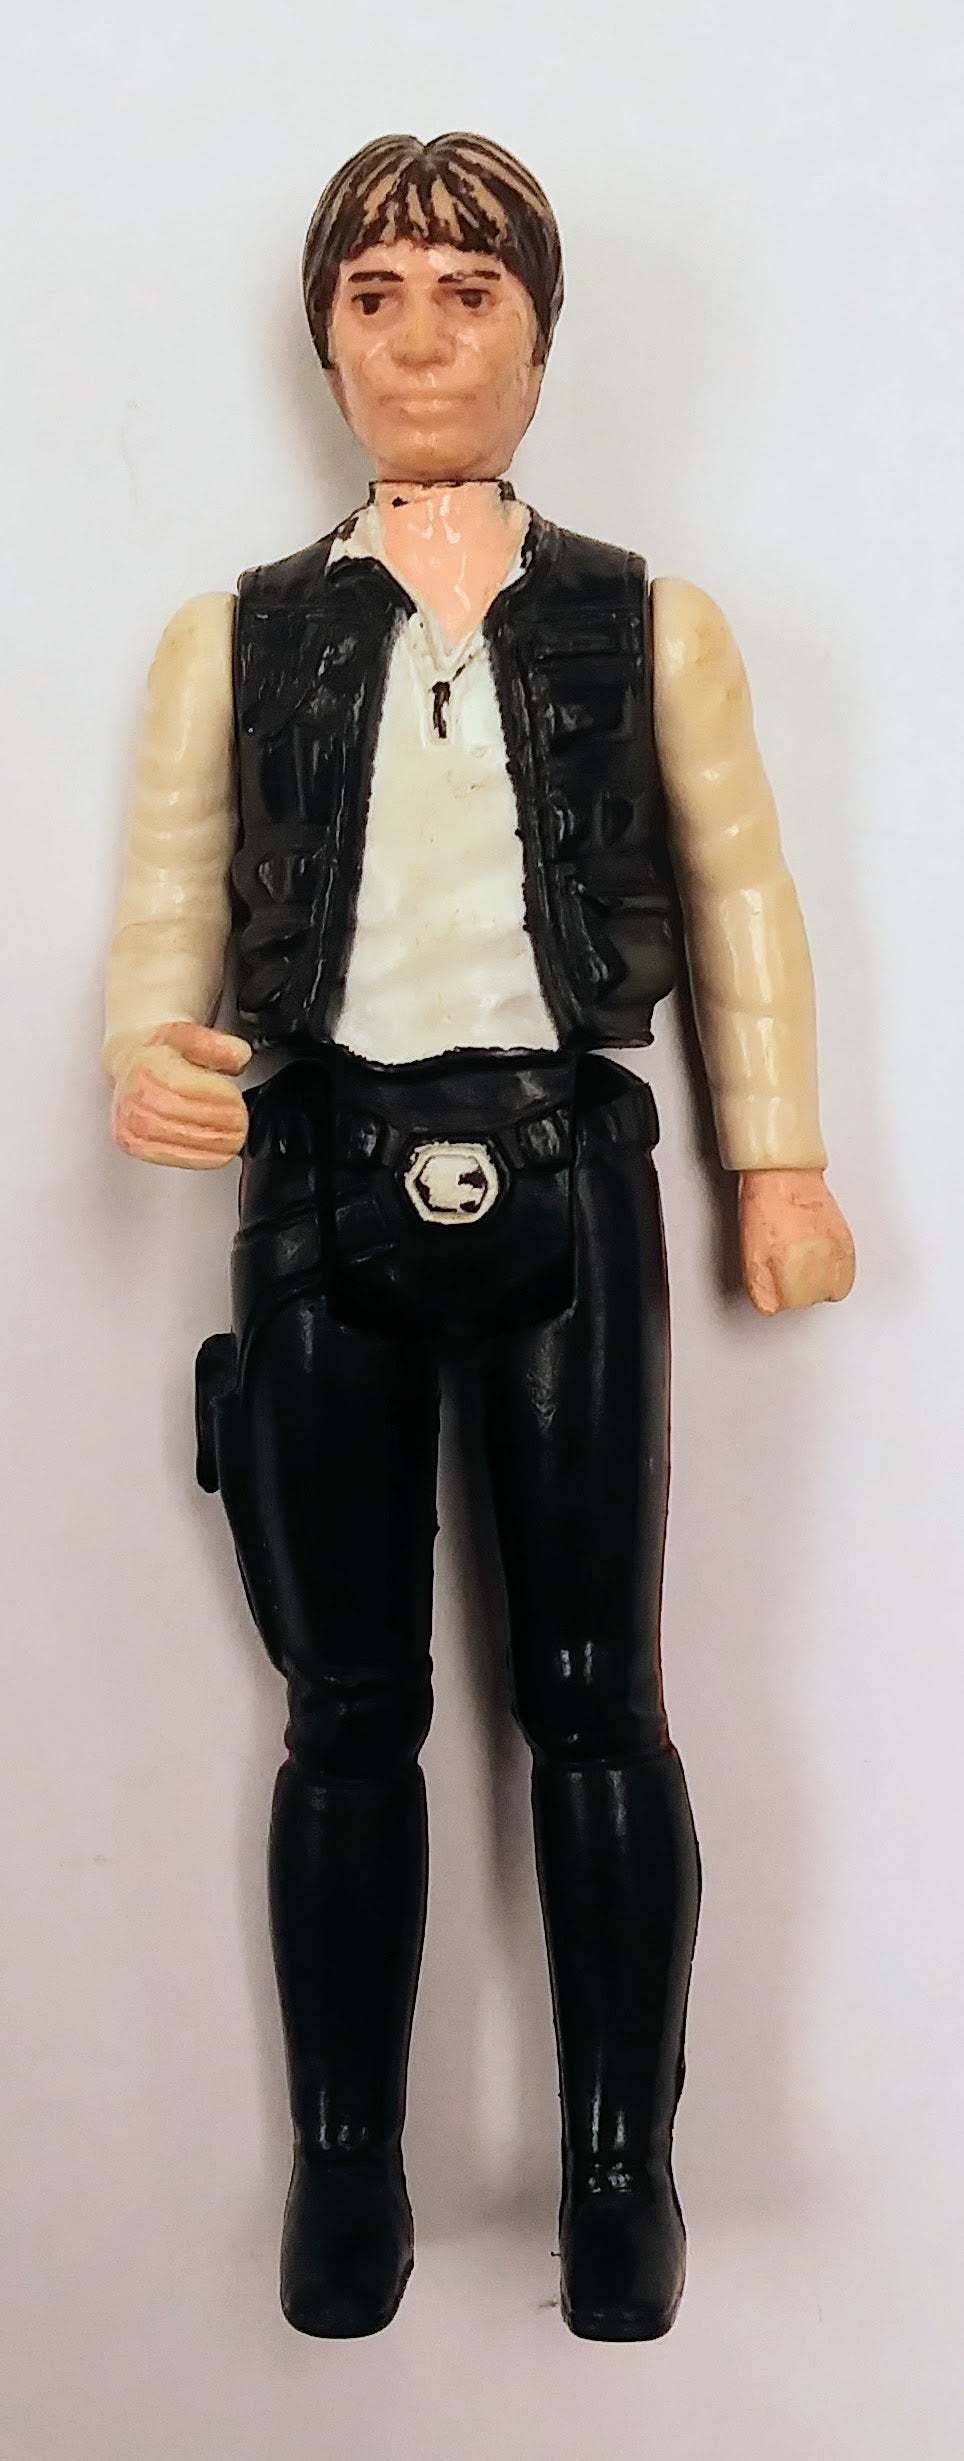 Star Wars action figure - Han Solo